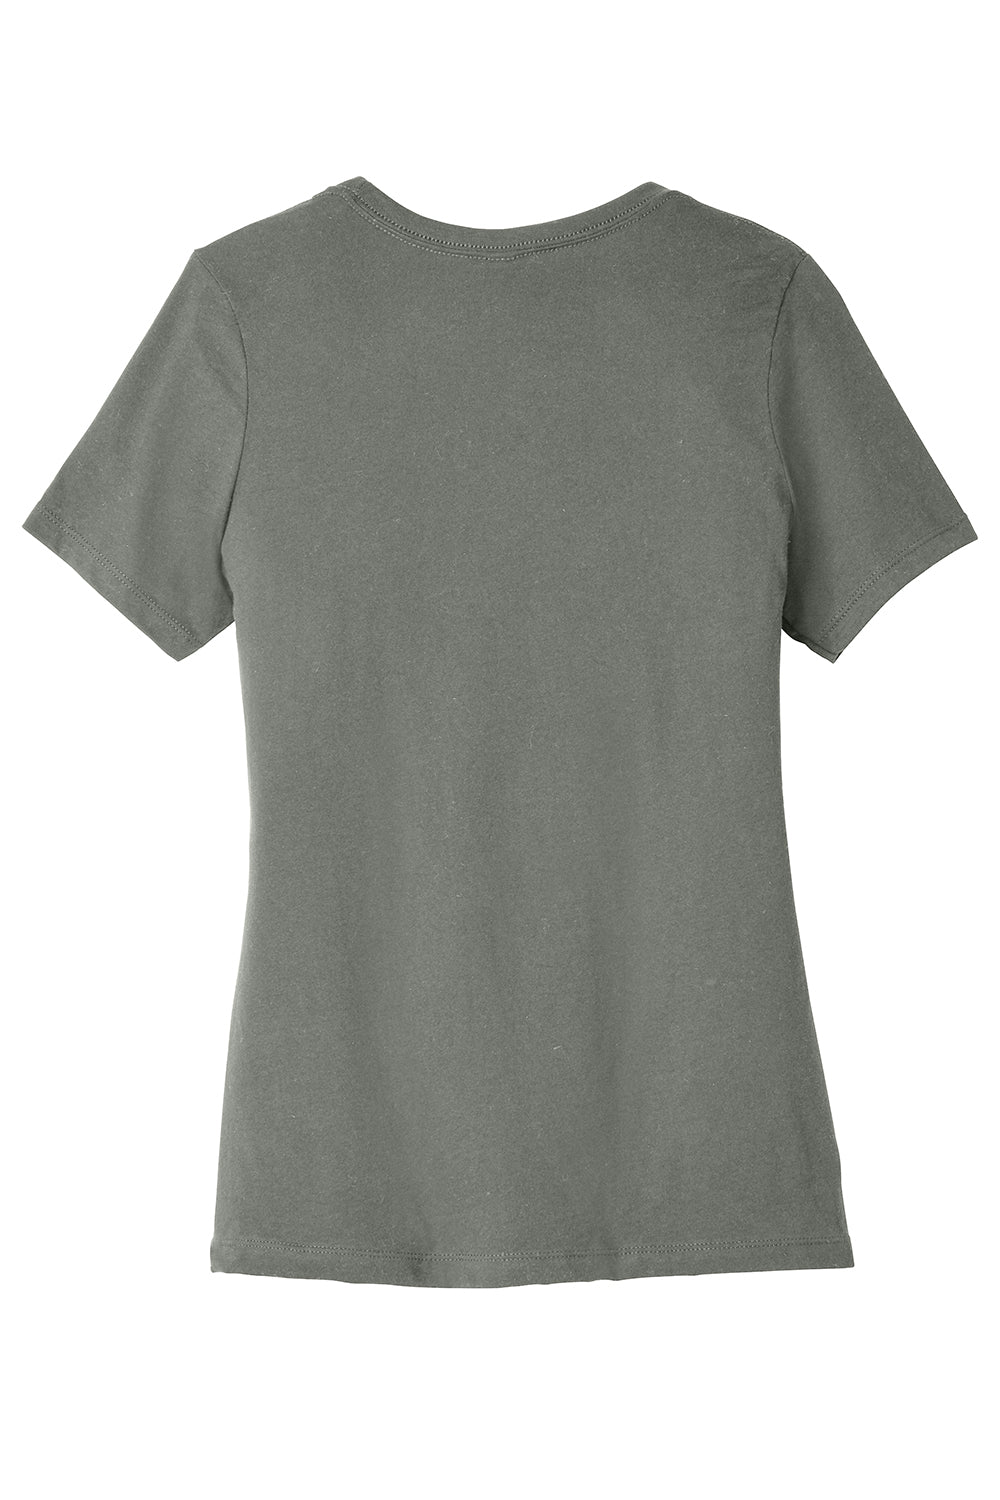 Bella + Canvas BC6413 Womens Short Sleeve Crewneck T-Shirt Storm Grey Flat Back